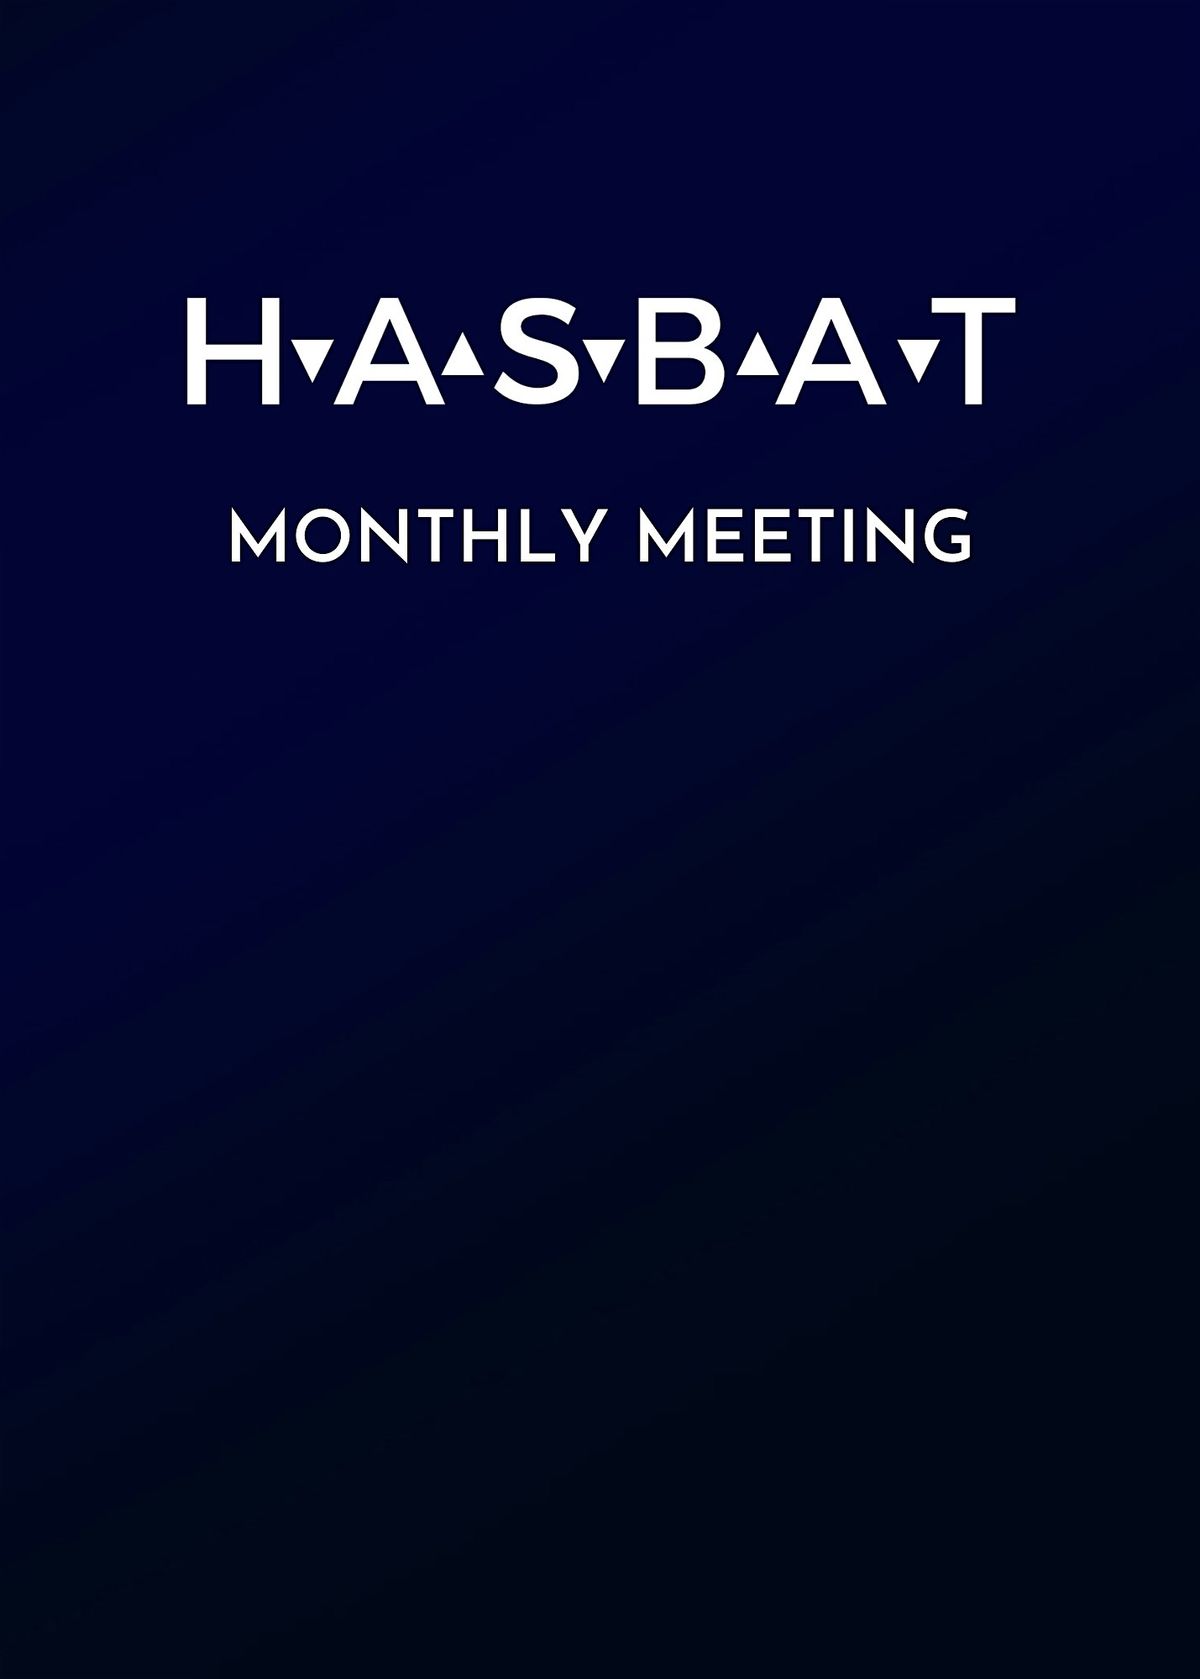 HASBAT  Monthly Membership Meeting, Training, and Luncheon - June 6th